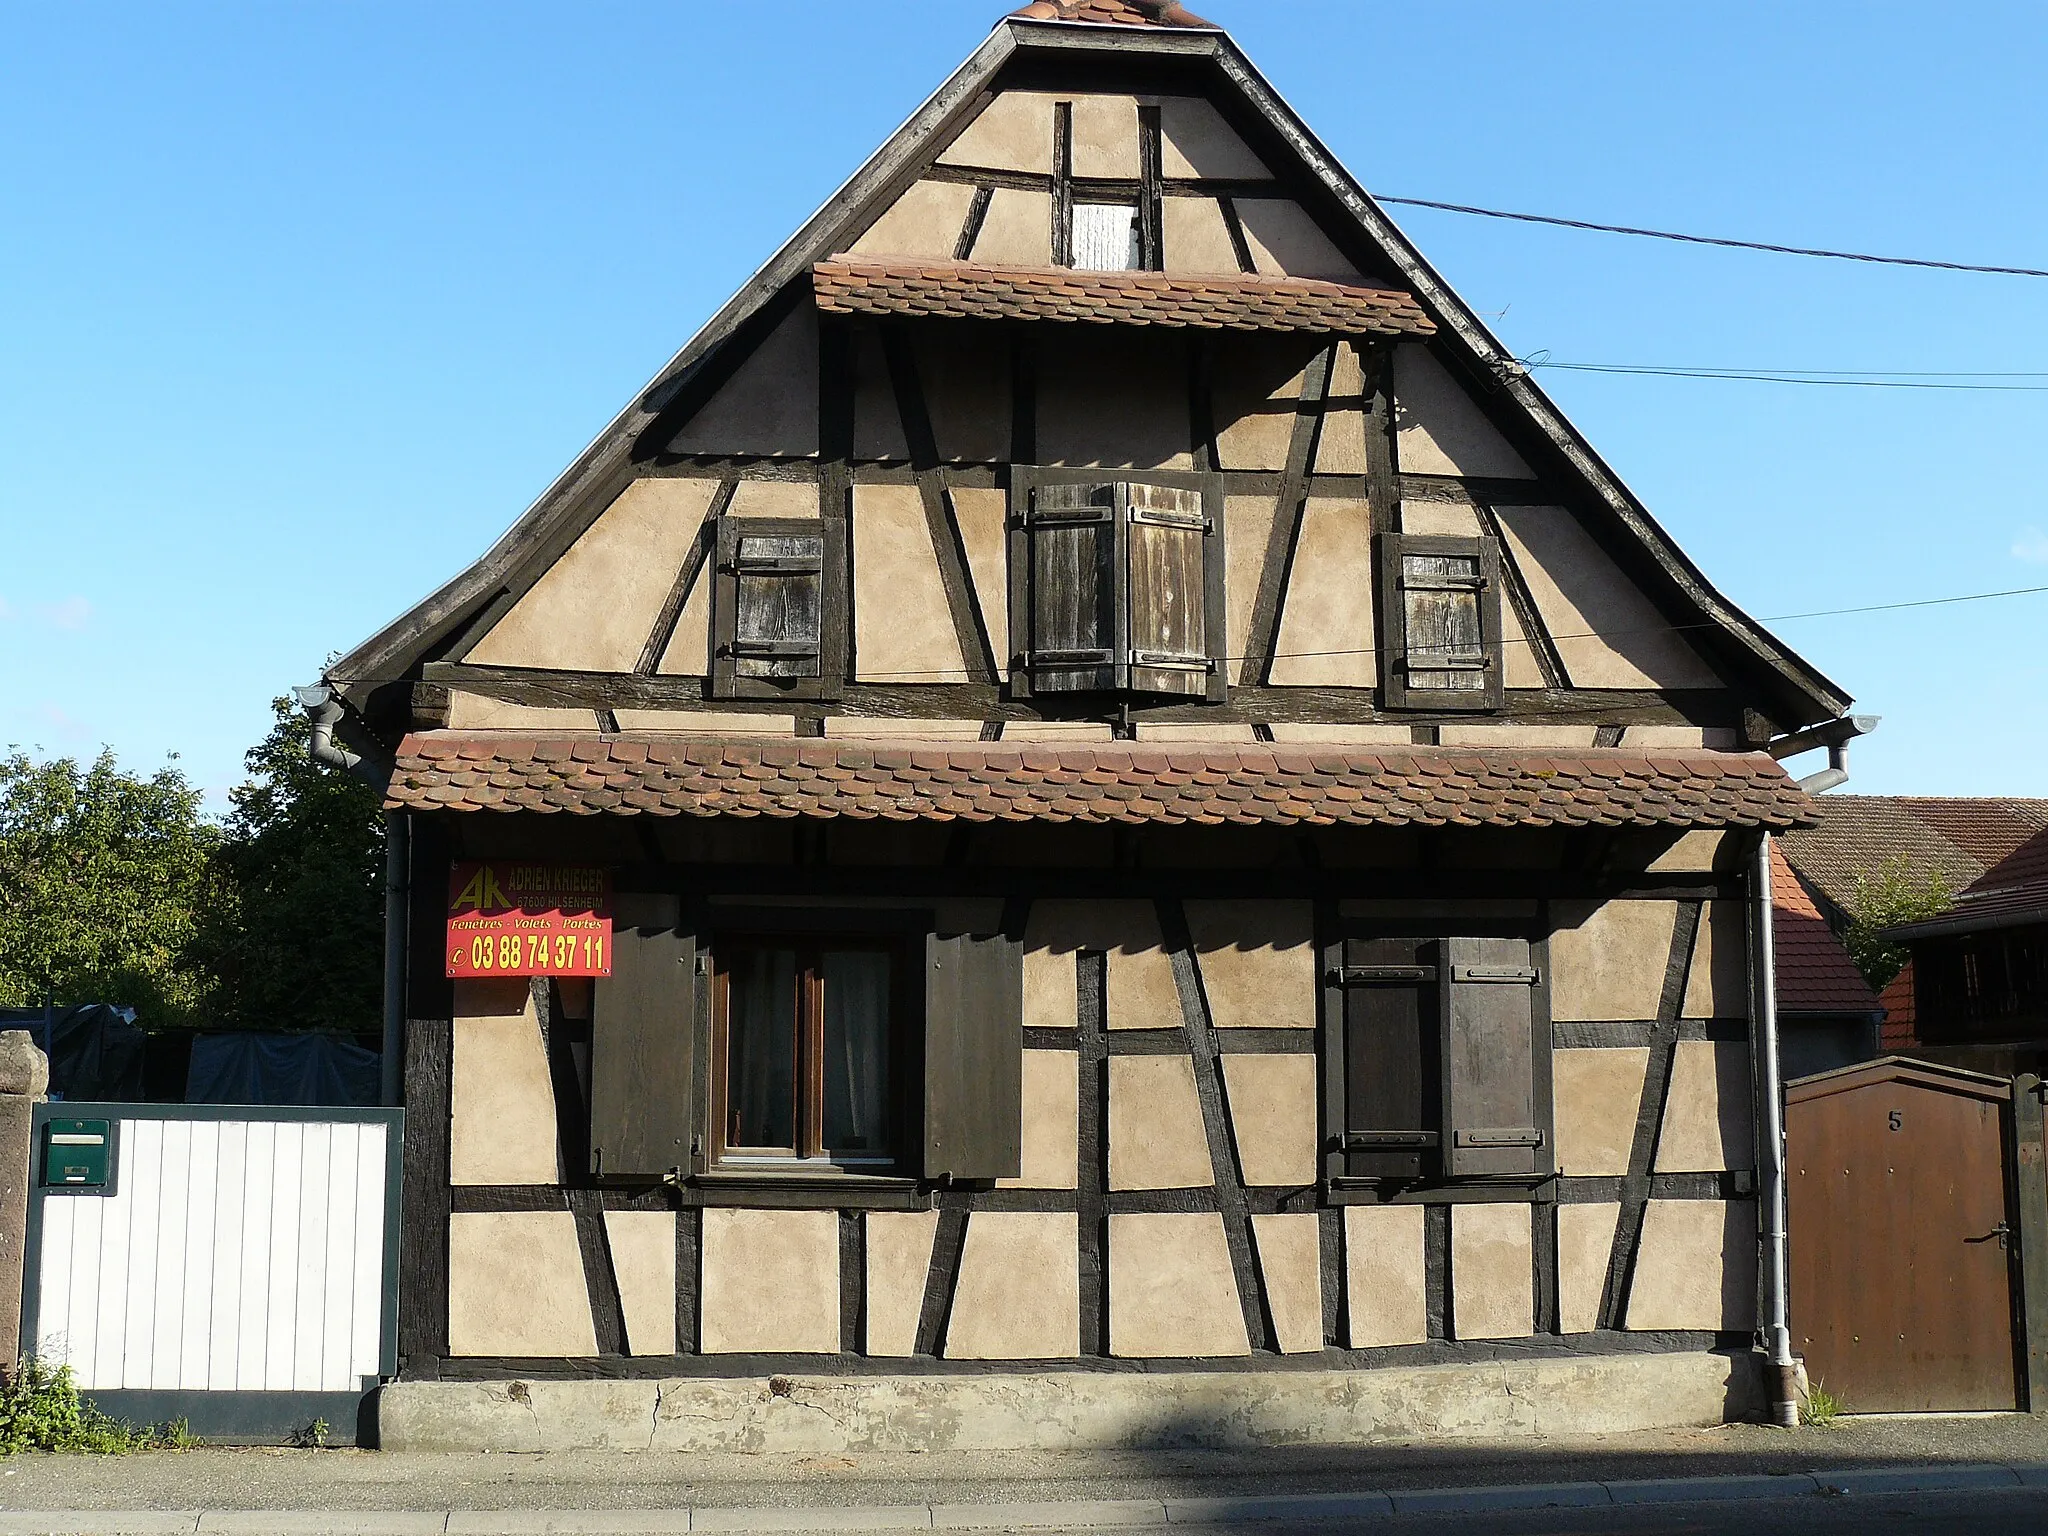 Image de Alsace